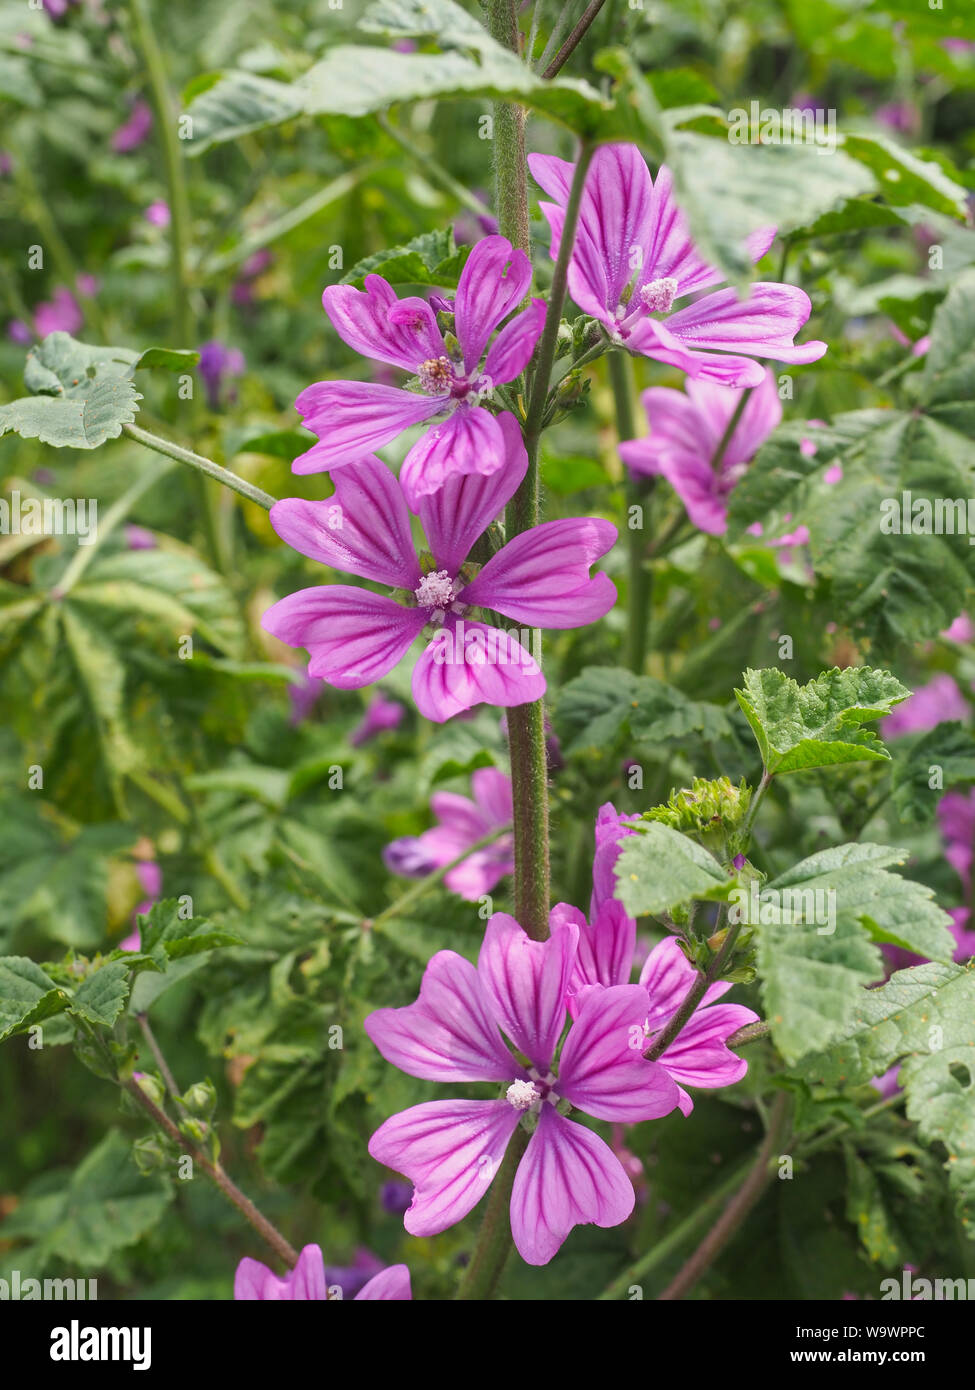 Malva Sylvestris Zebrina or Zebra Hollyhock is vigorous plant with showy flowers of bright mauve-purple with dark veins. M.Sylvestris family Malvaceae Stock Photo